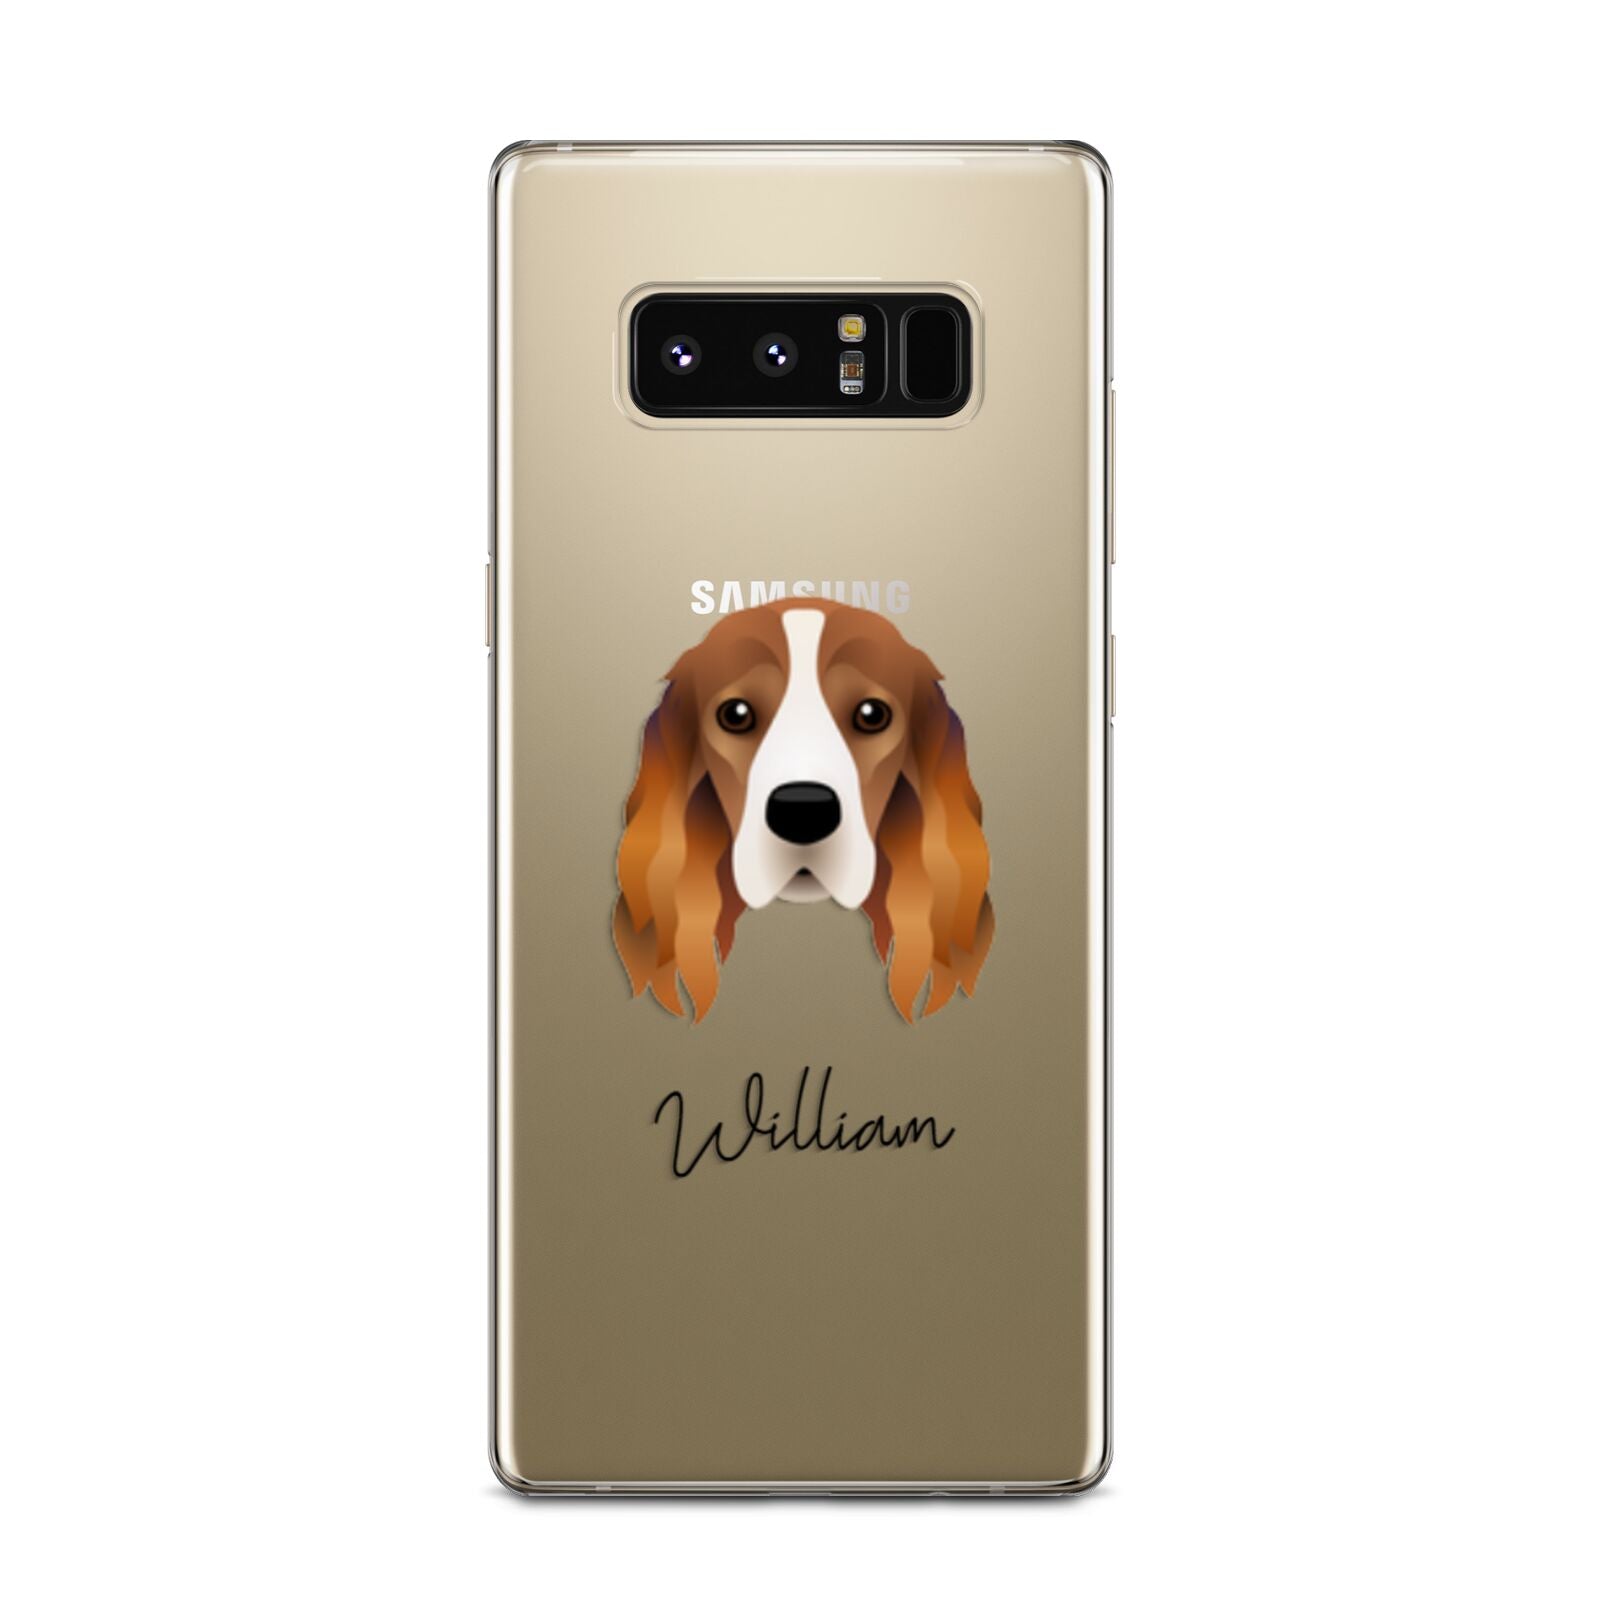 Cocker Spaniel Personalised Samsung Galaxy Note 8 Case